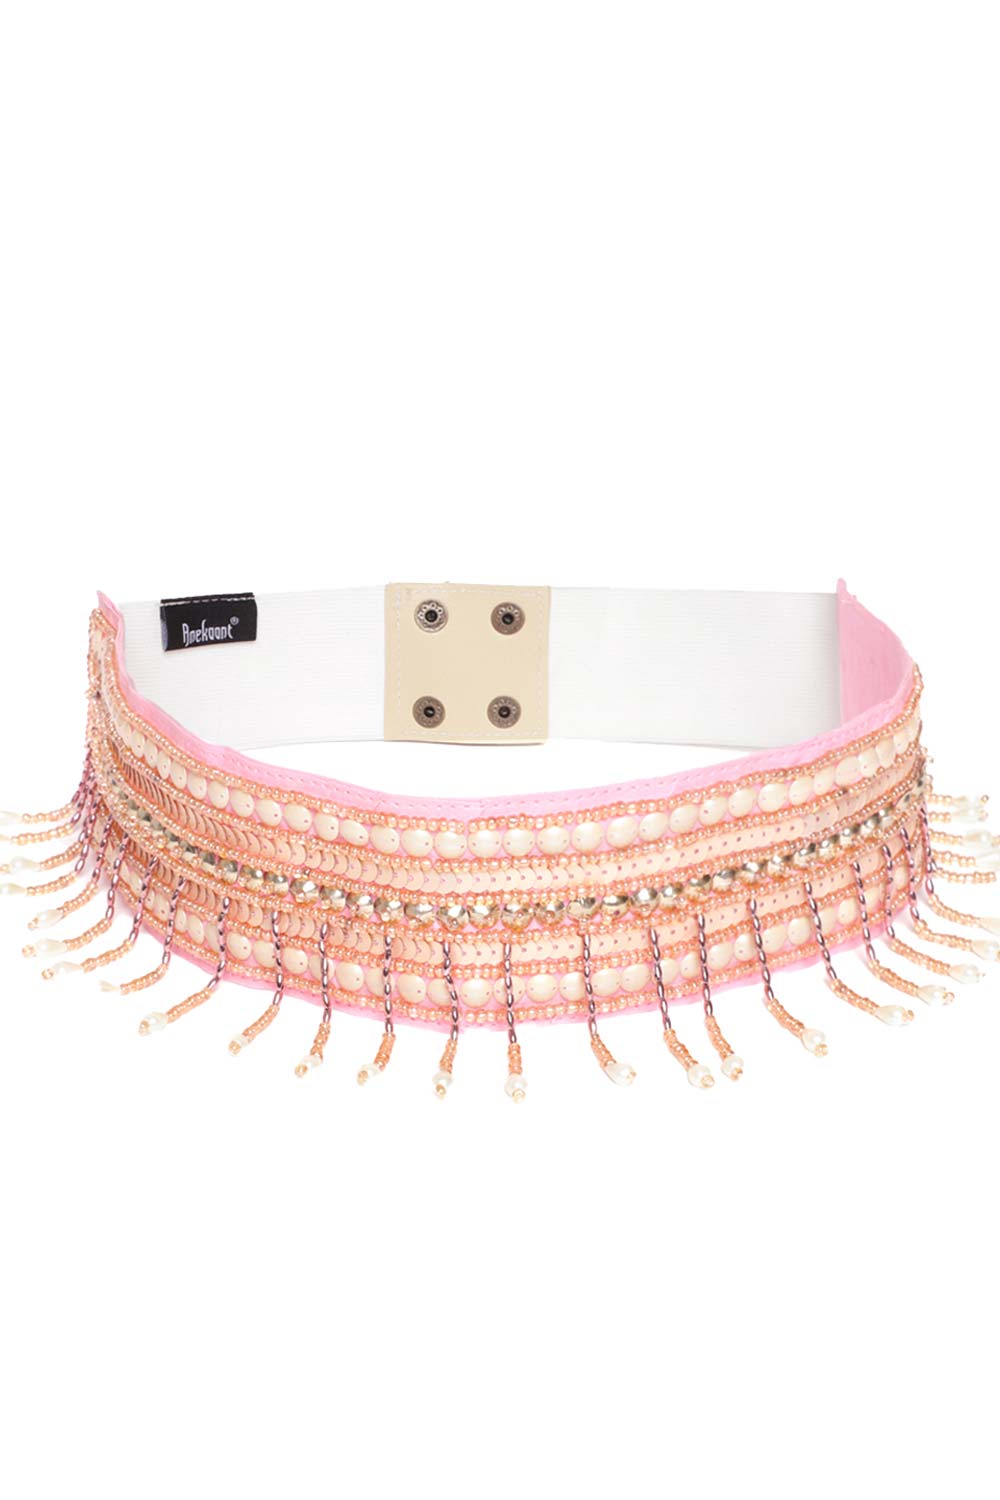 Buy Striped Bead Work Waist Belt in Baby Pink & Multi Online